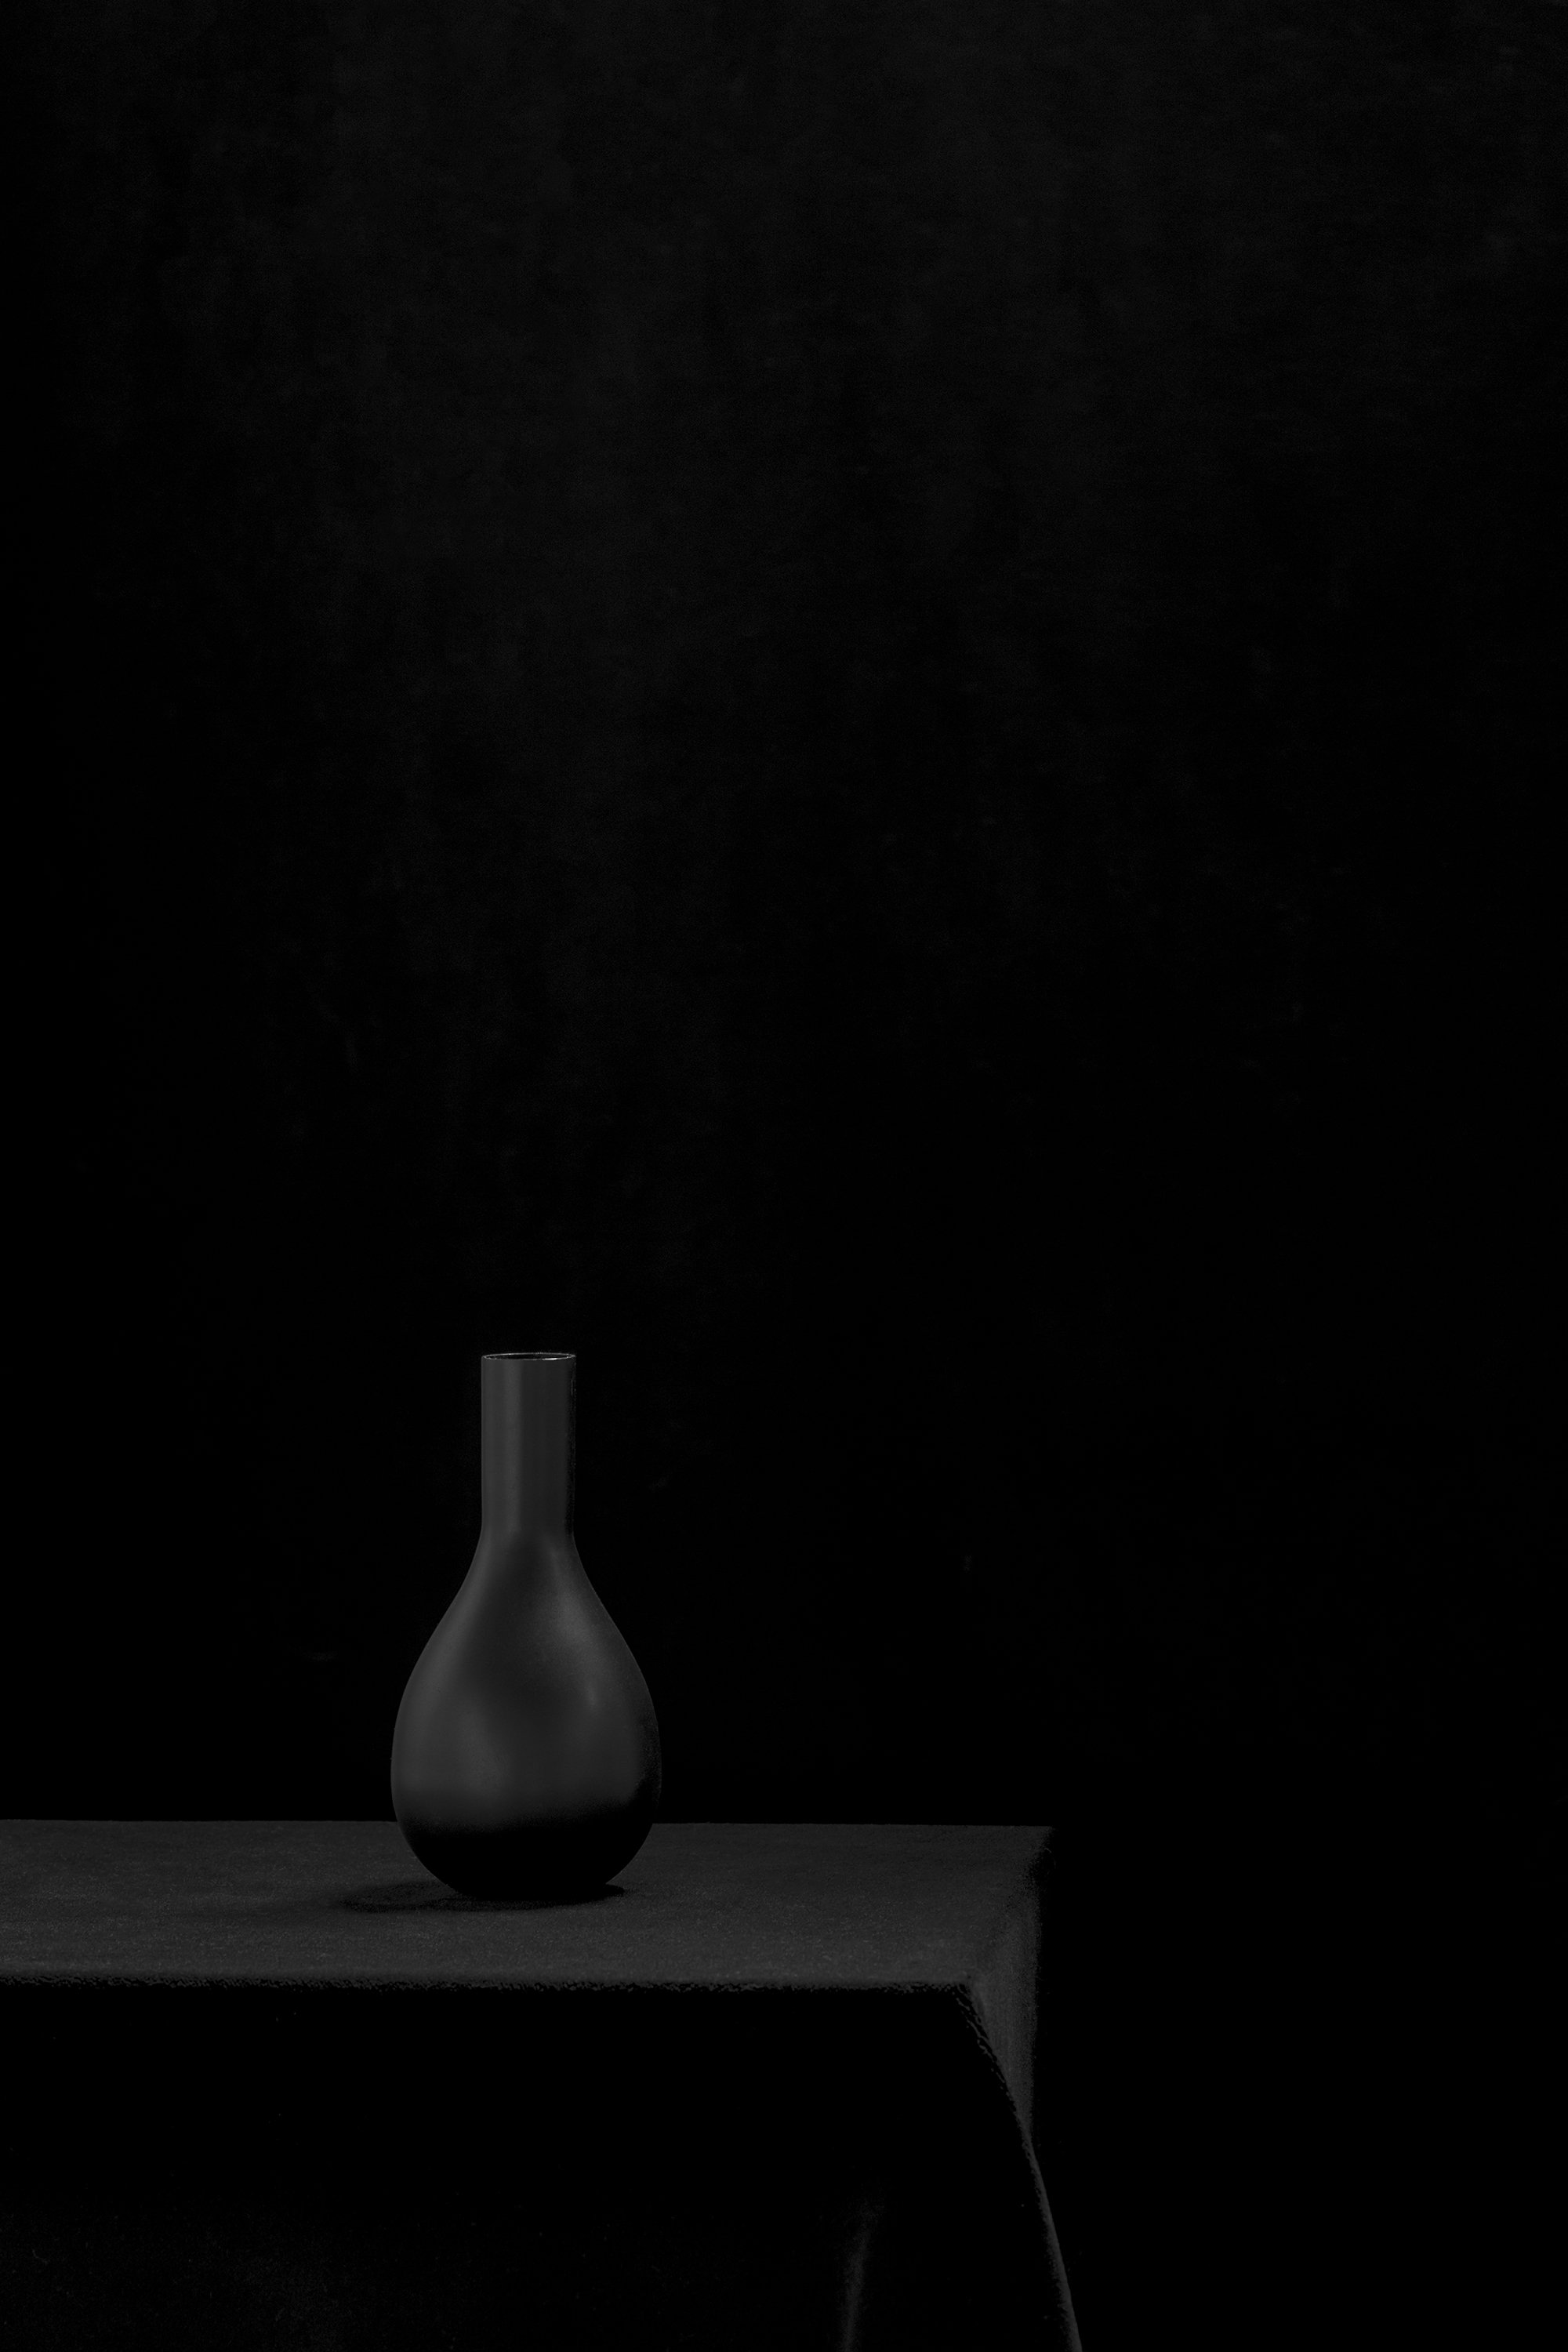 back to black vase_DSC6025_sharp 20x30 copy.jpg